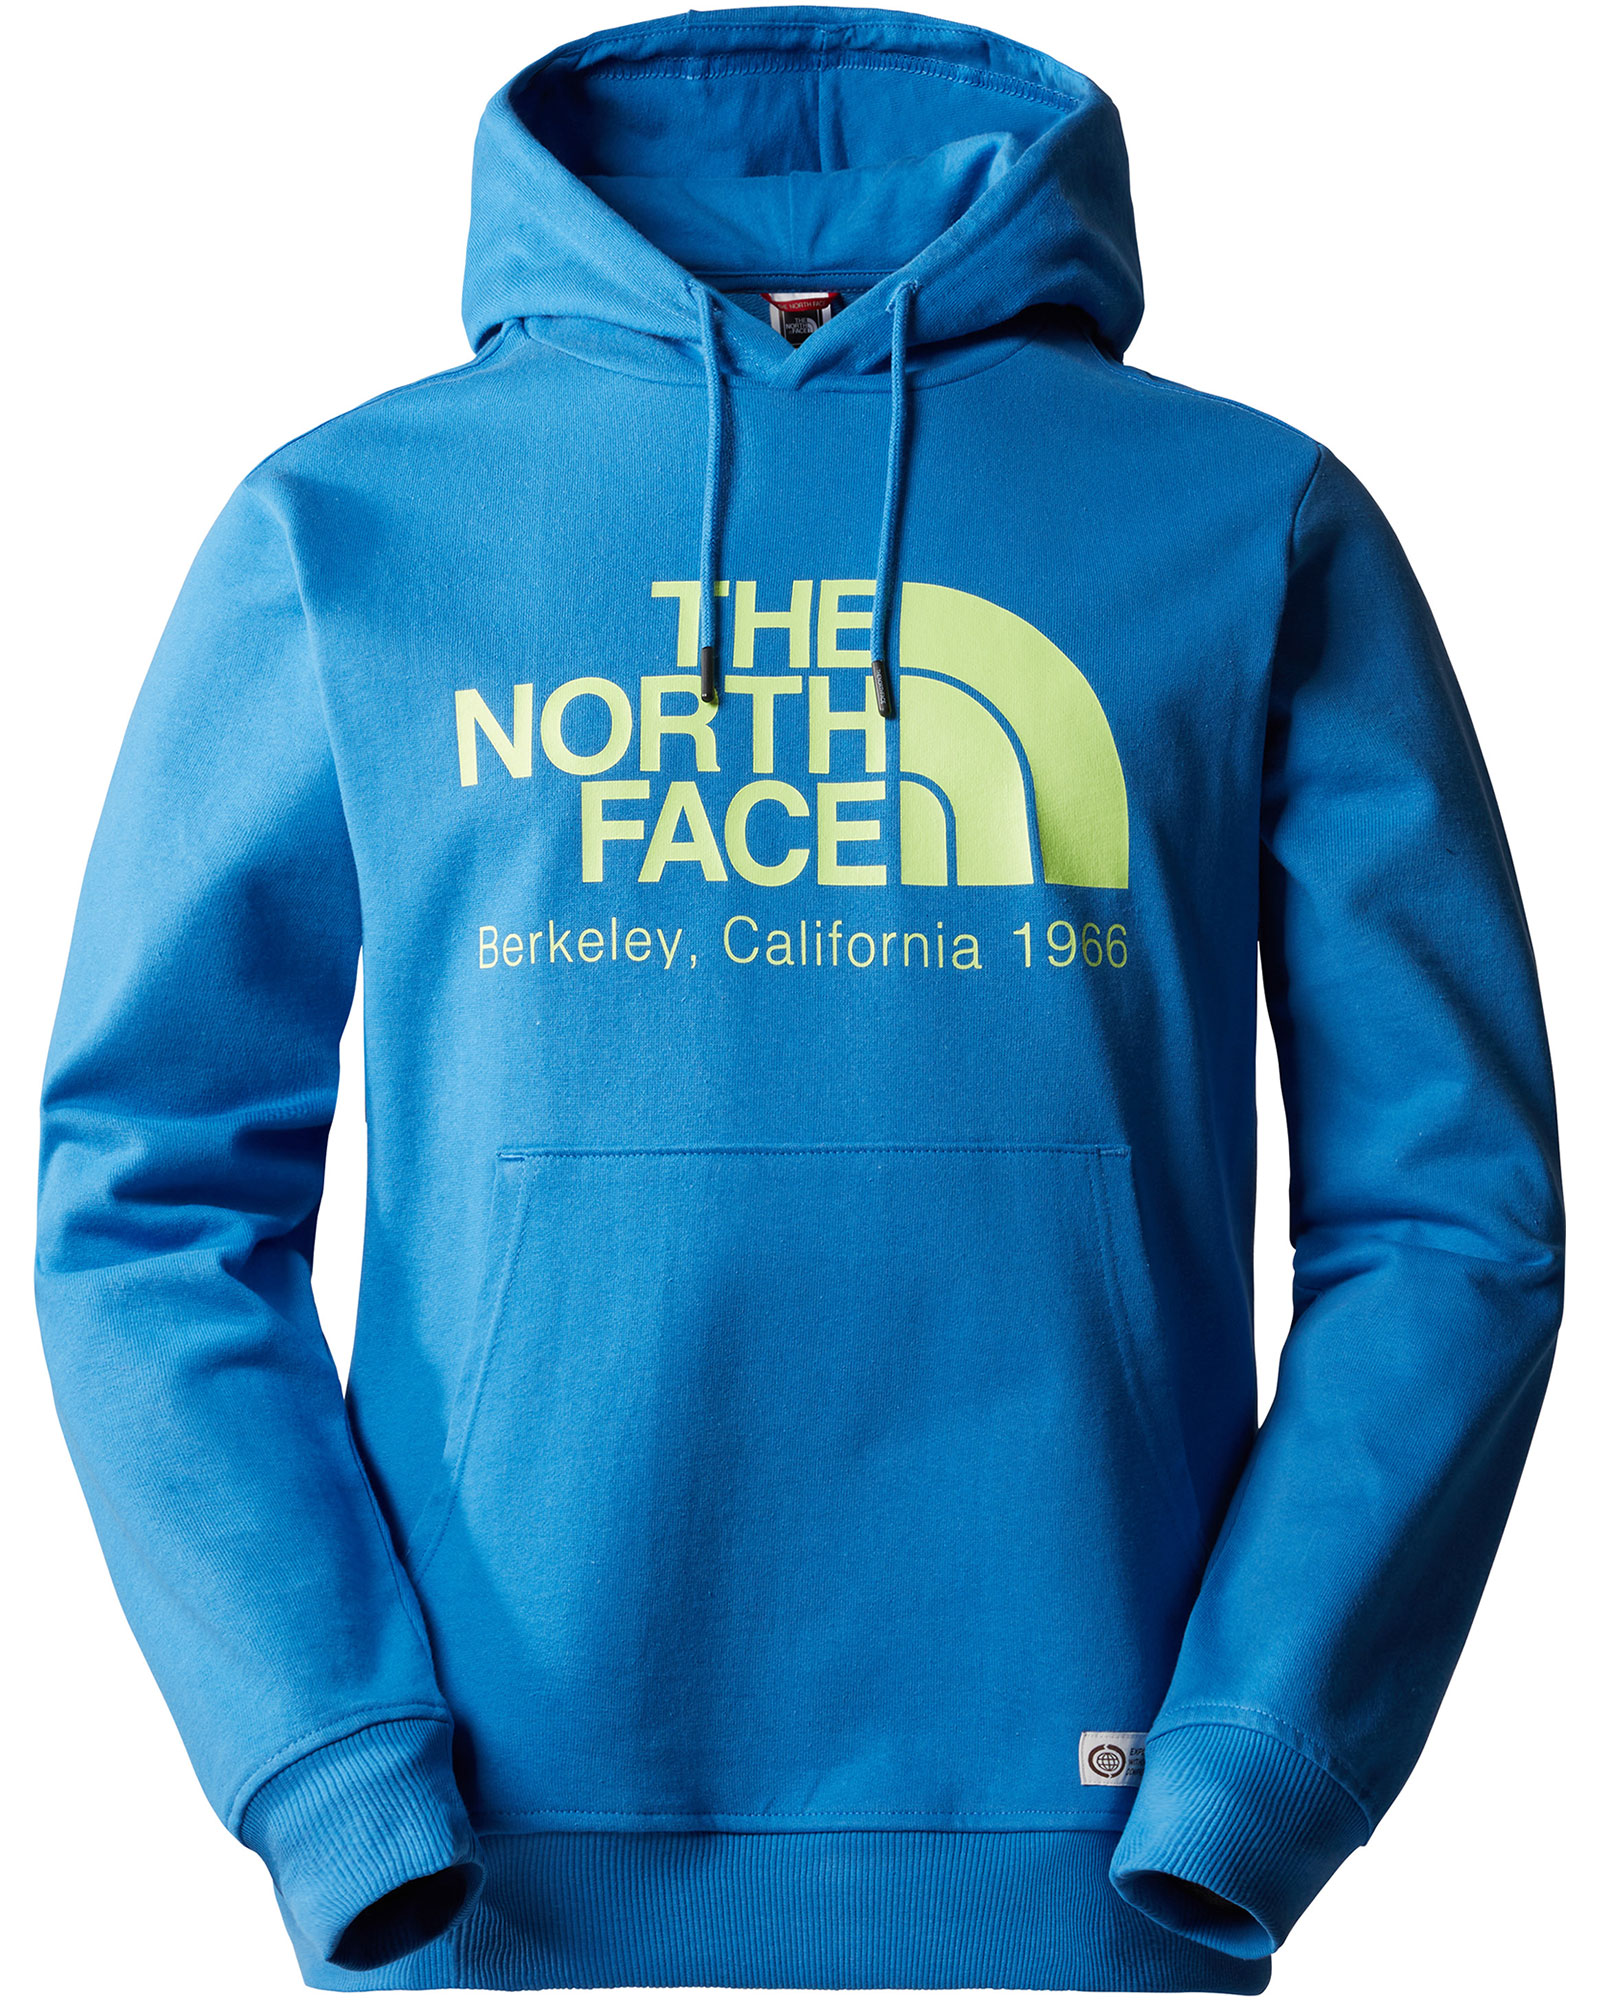 The North Face Men’s Berkeley California Hoodie - Super Sonic Blue XS